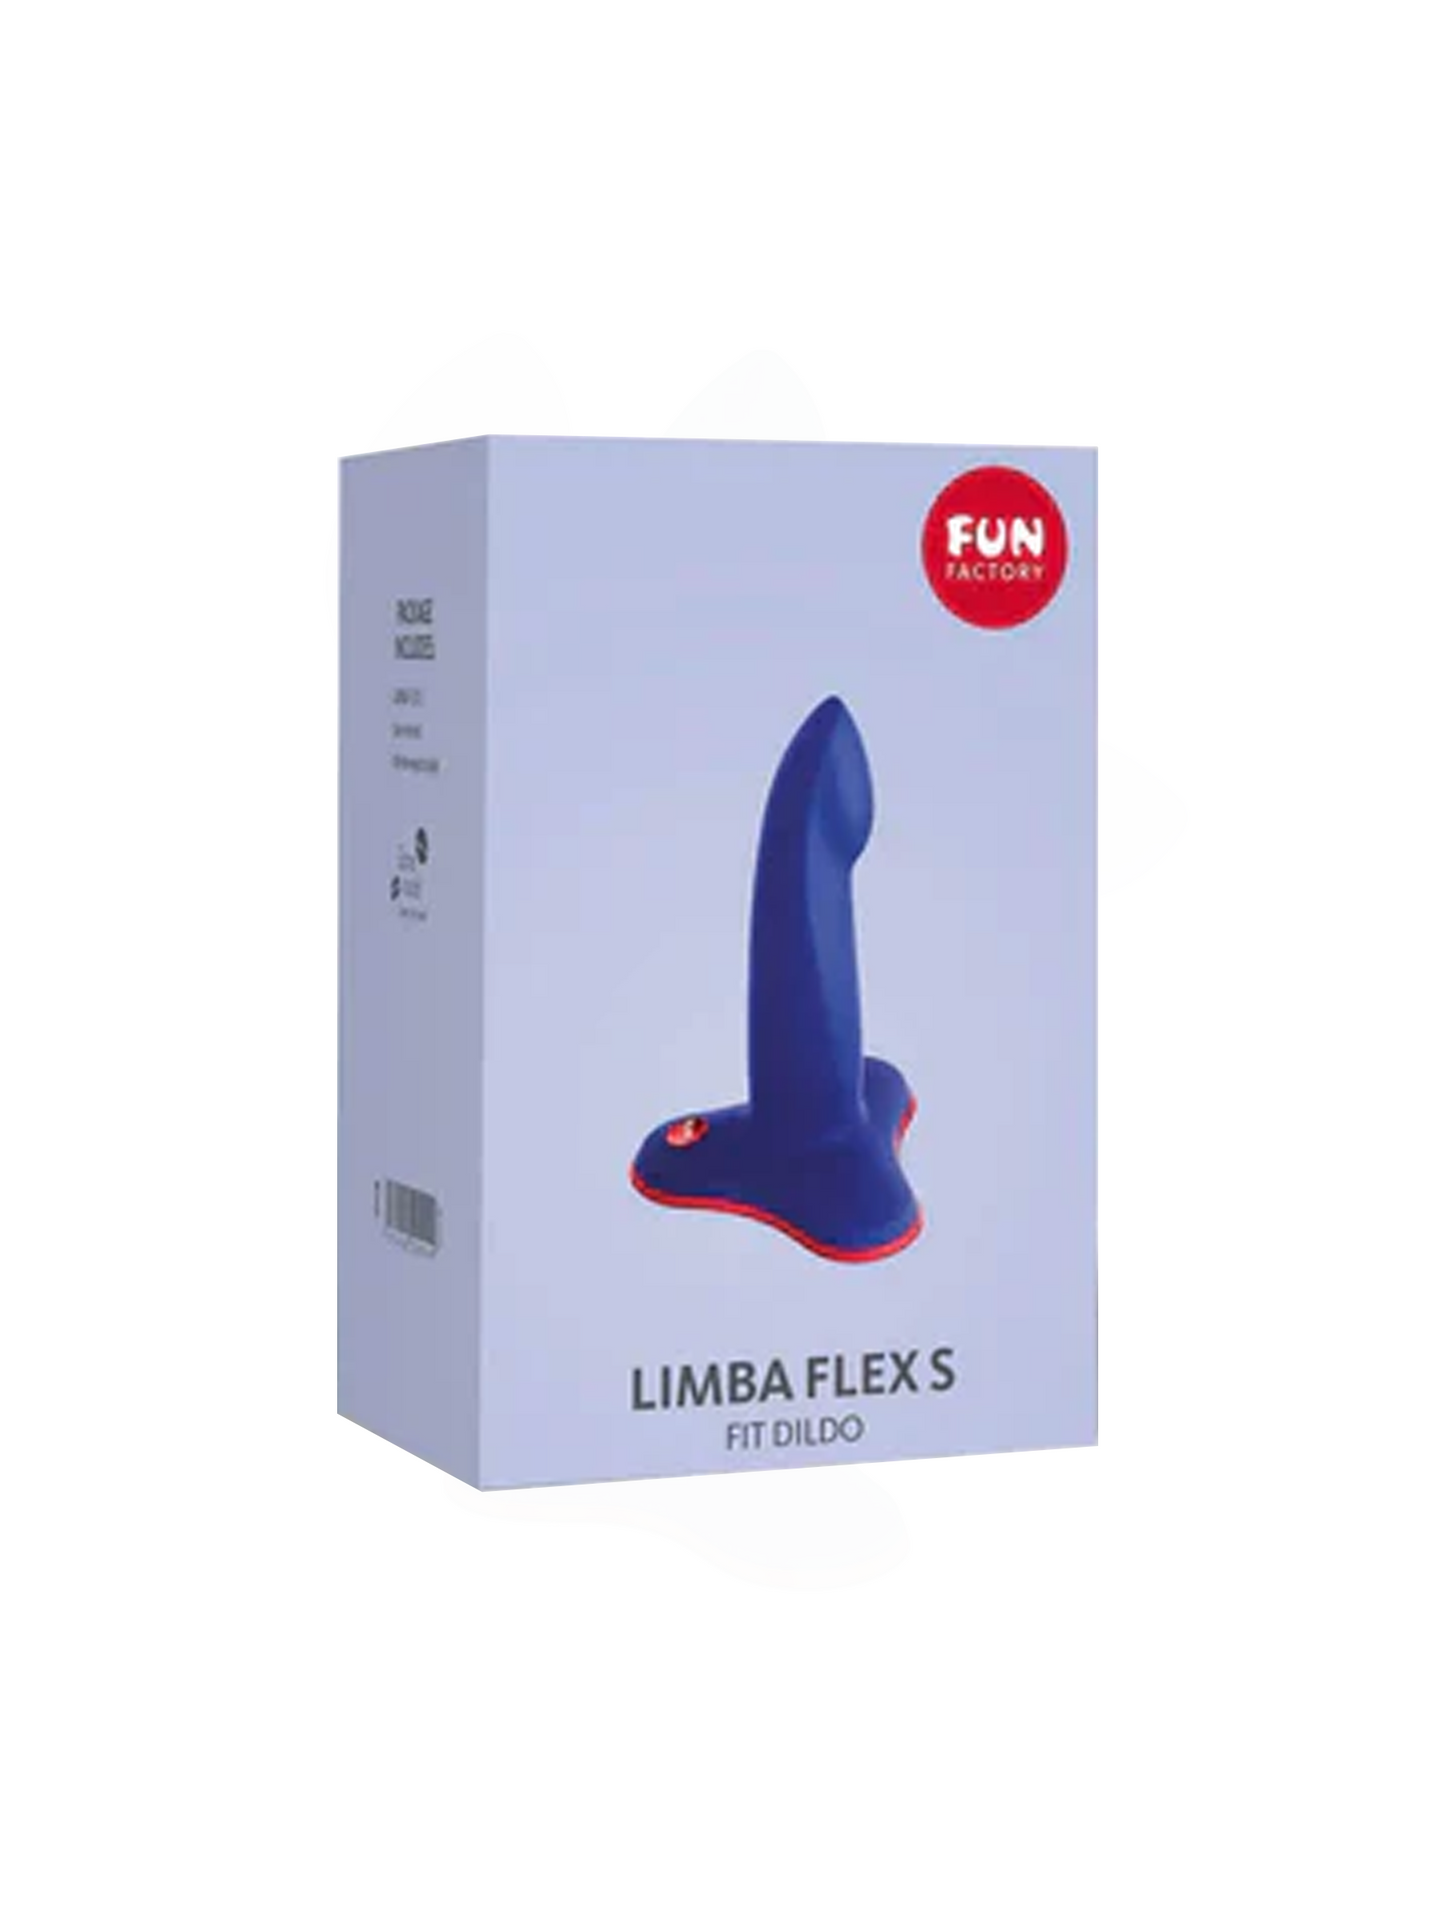 Fun Factory Limba Flex S in Box